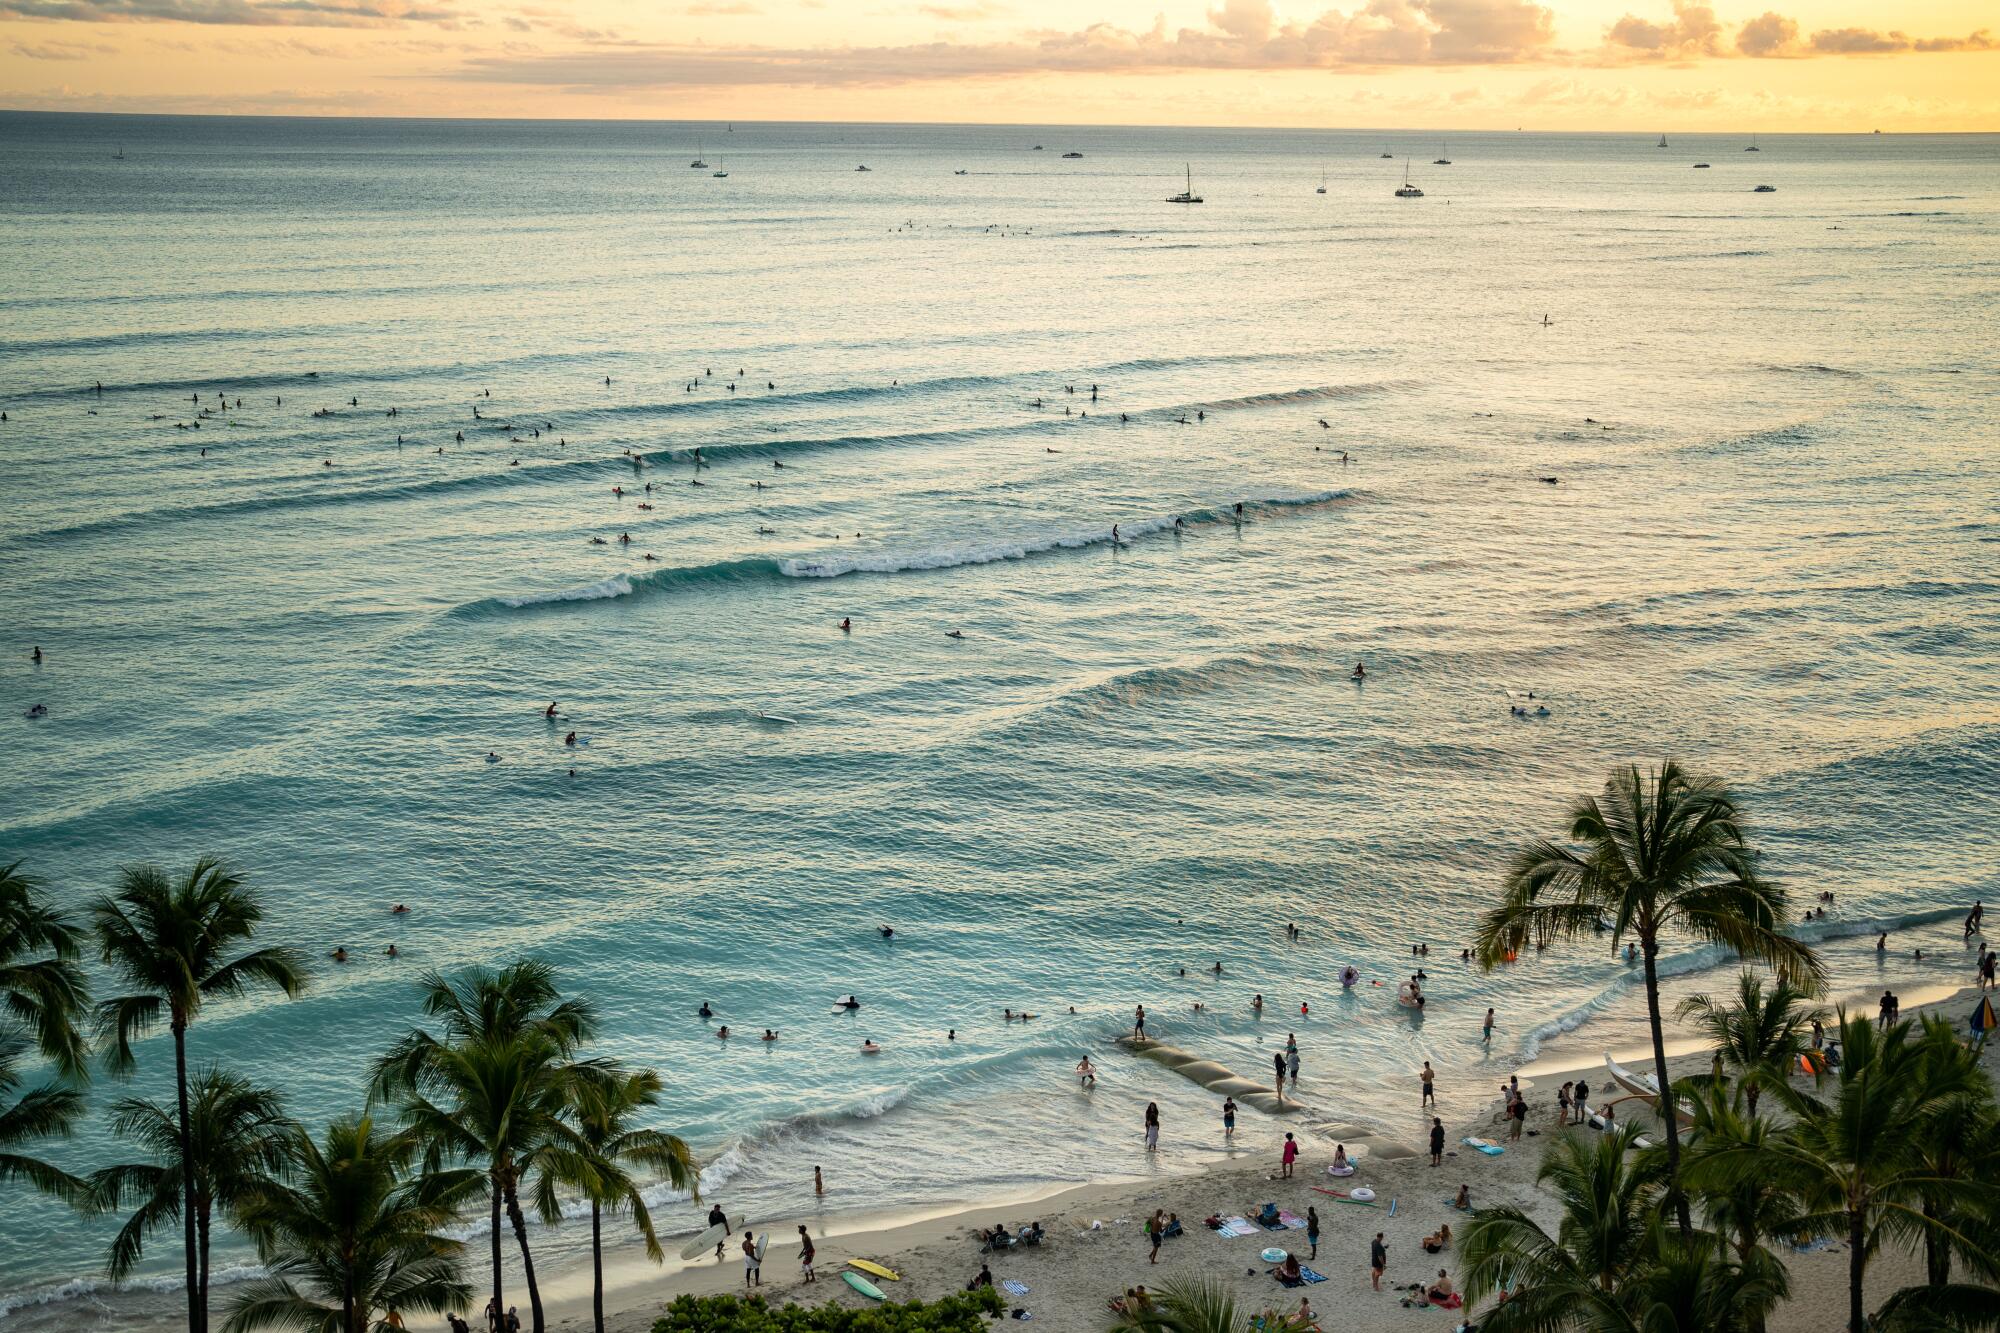 A wide view of Waikiki Beach on the Hawaiian island of Oahu